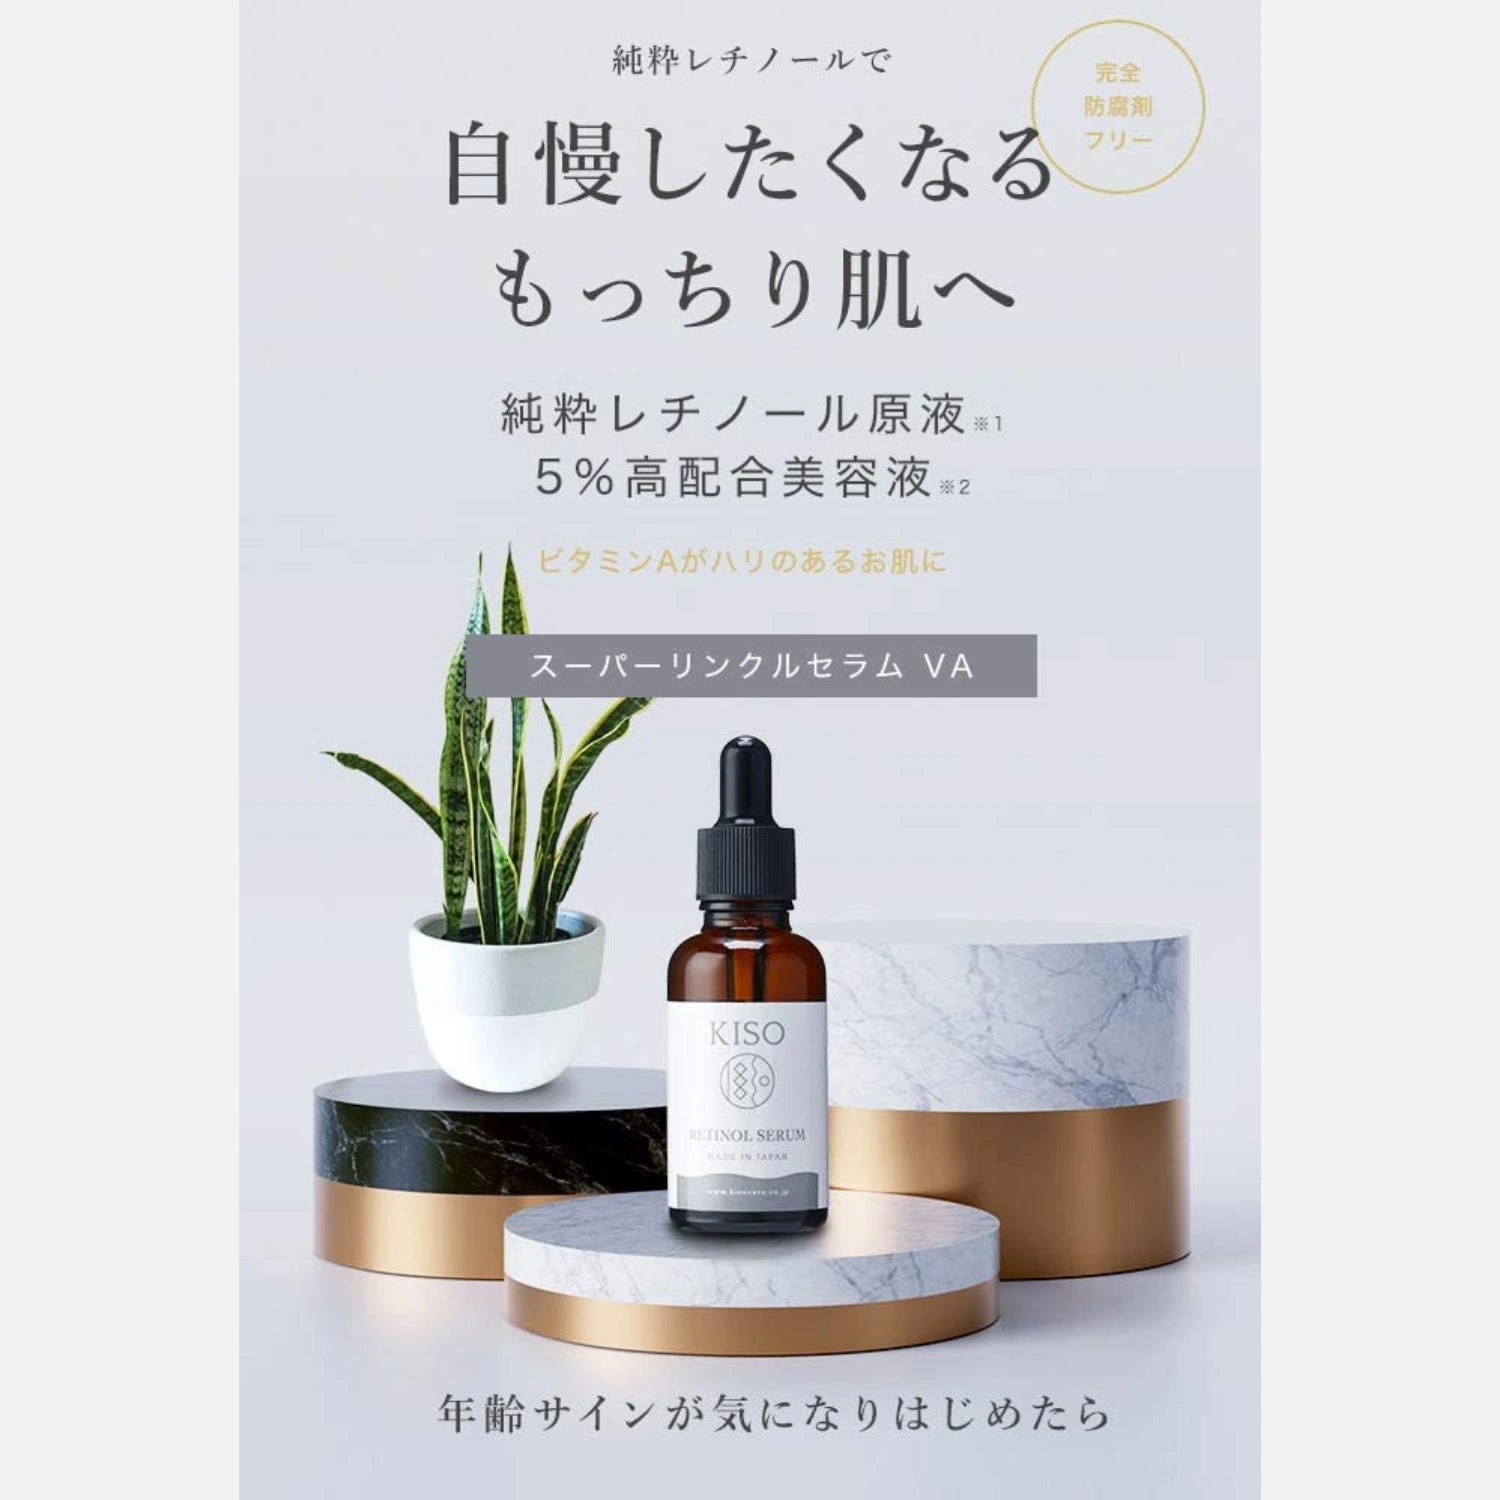 Kiso Care Pure Retinol 0.1% Serum 30ml - Buy Me Japan